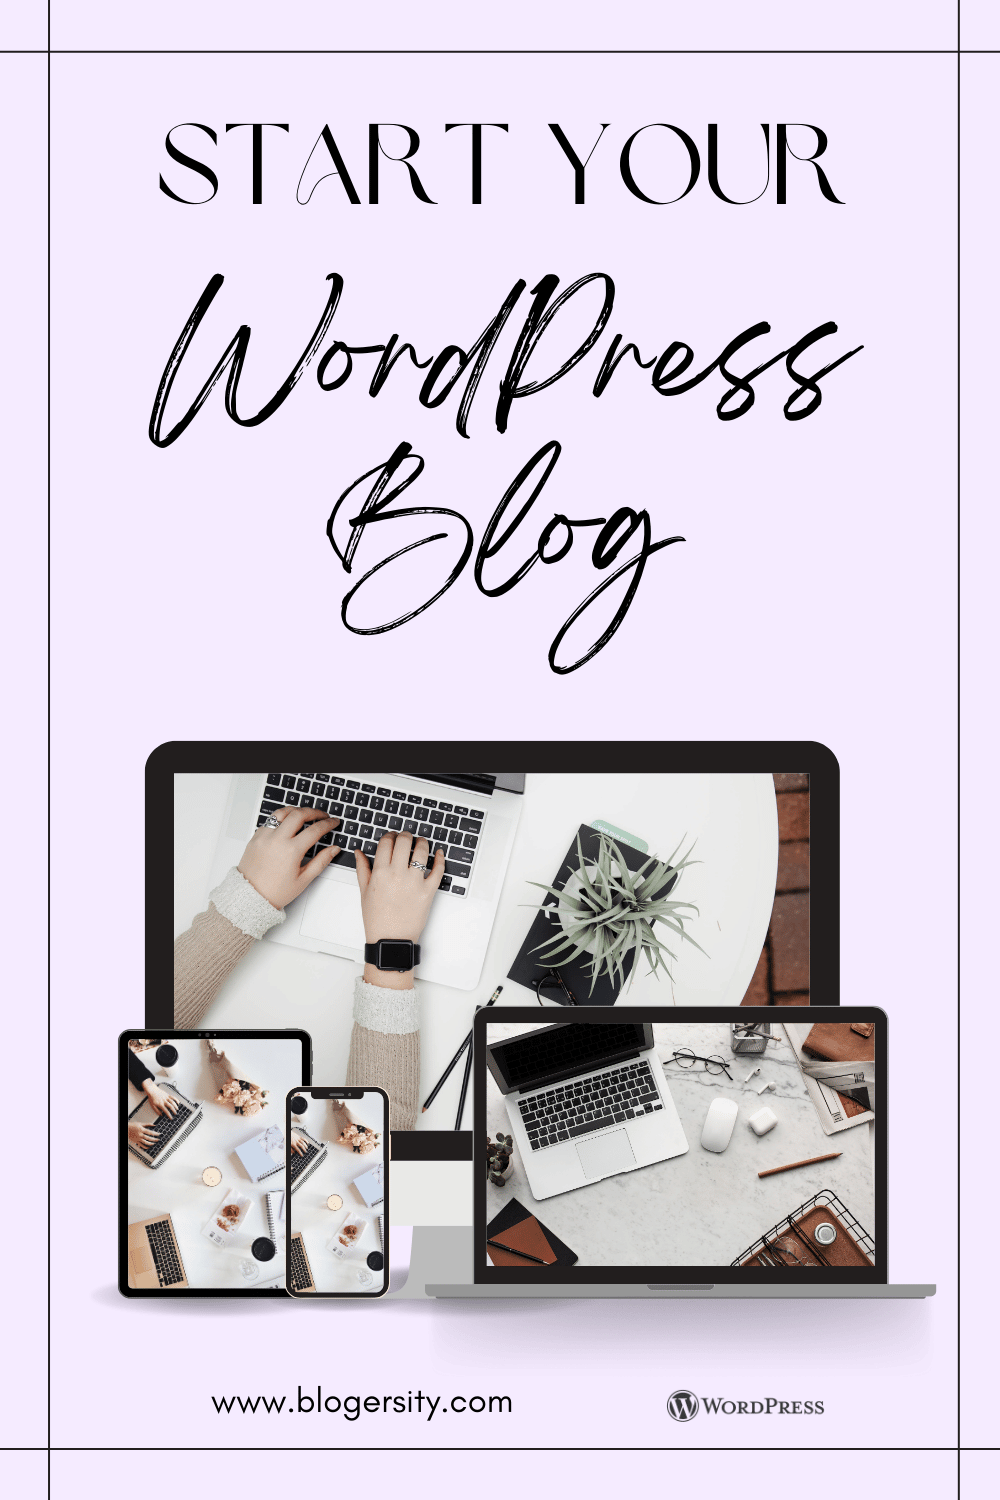 Start your WordPress blog